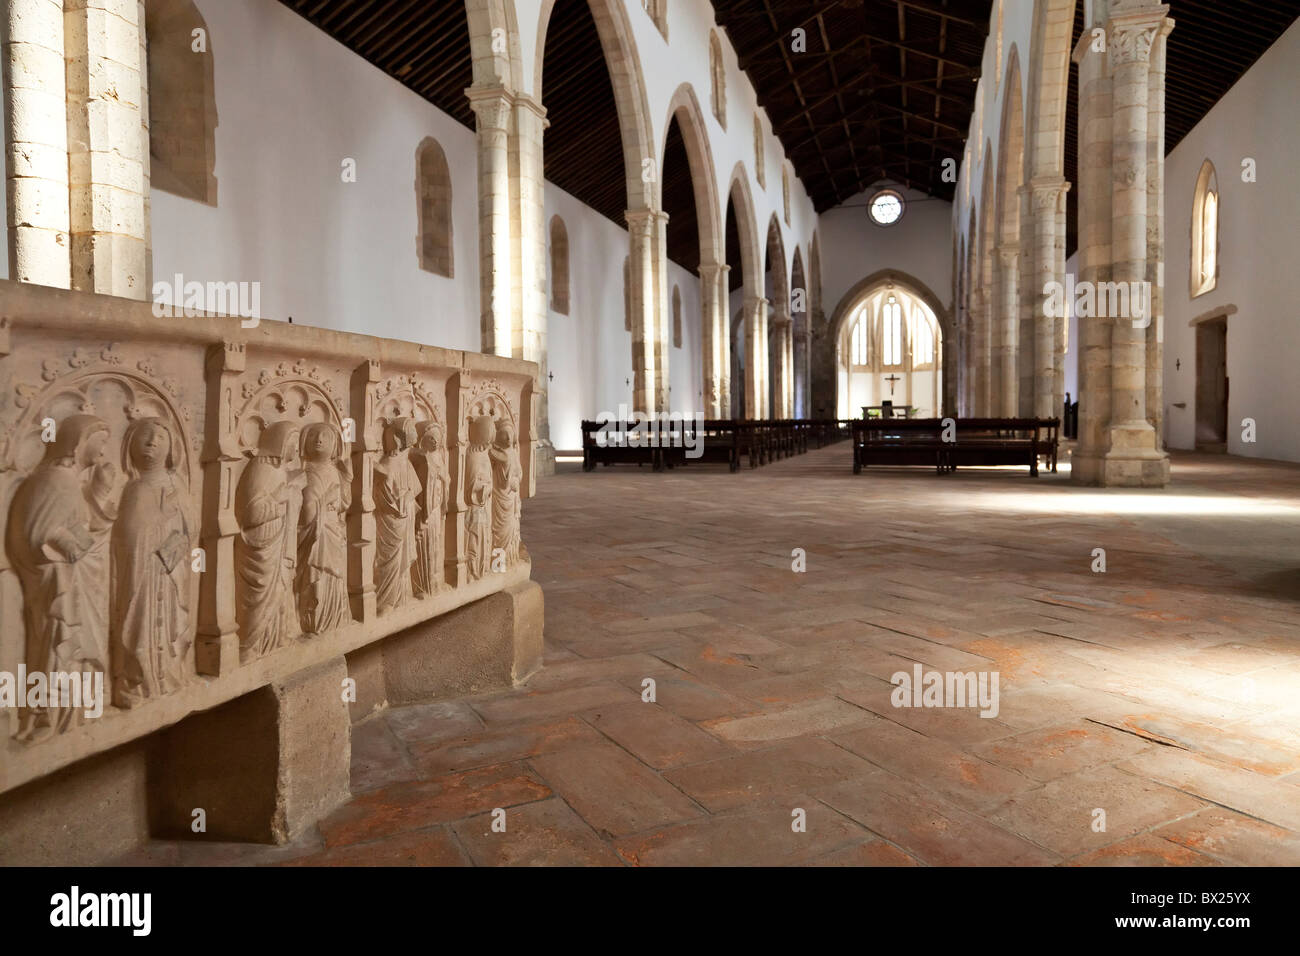 Santa Clara Church in the city of Santarém, Portugal. 13th century Mendicant Gothic Architecture. Stock Photo